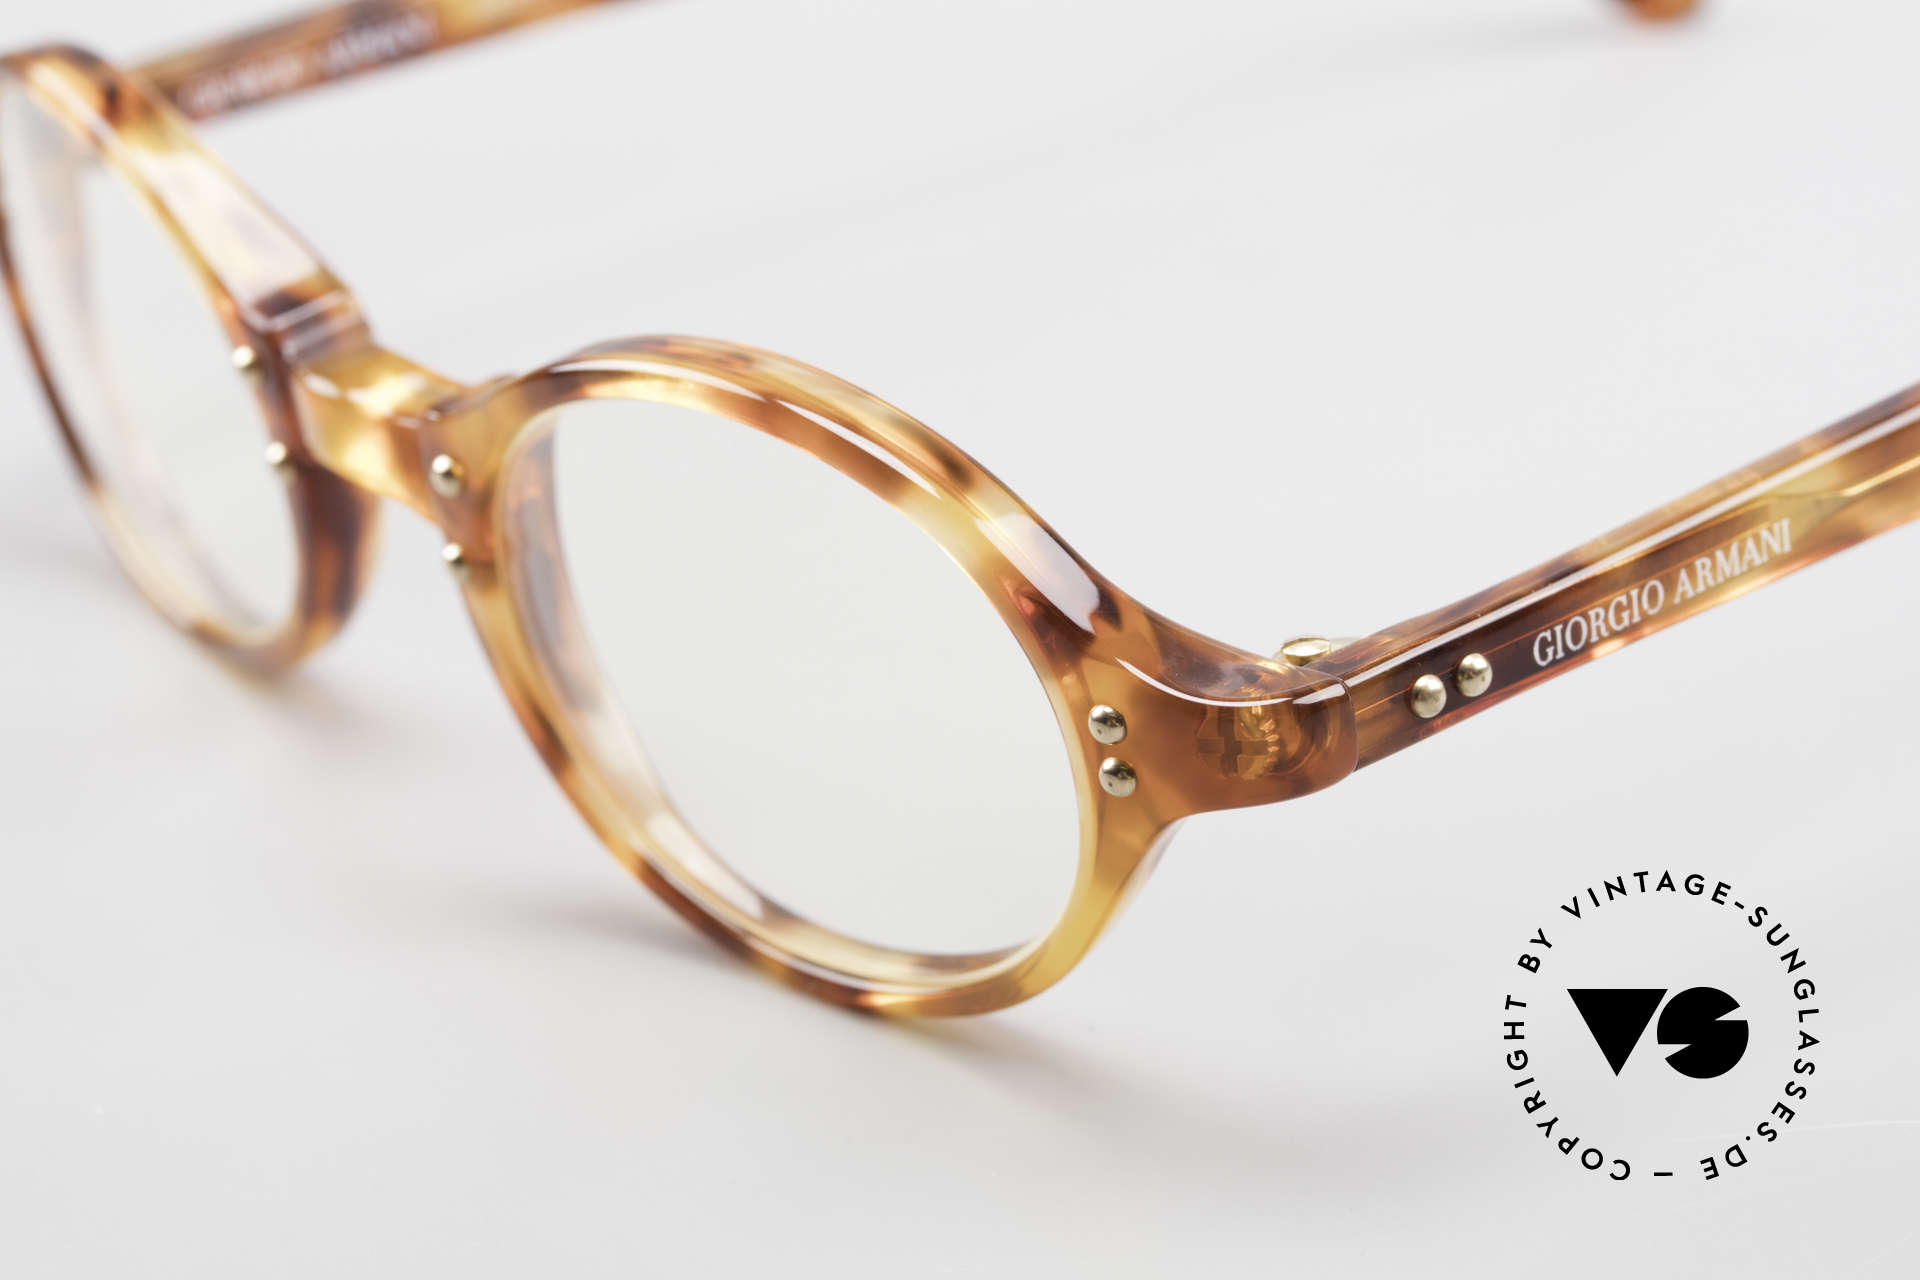 armani frames for womens glasses